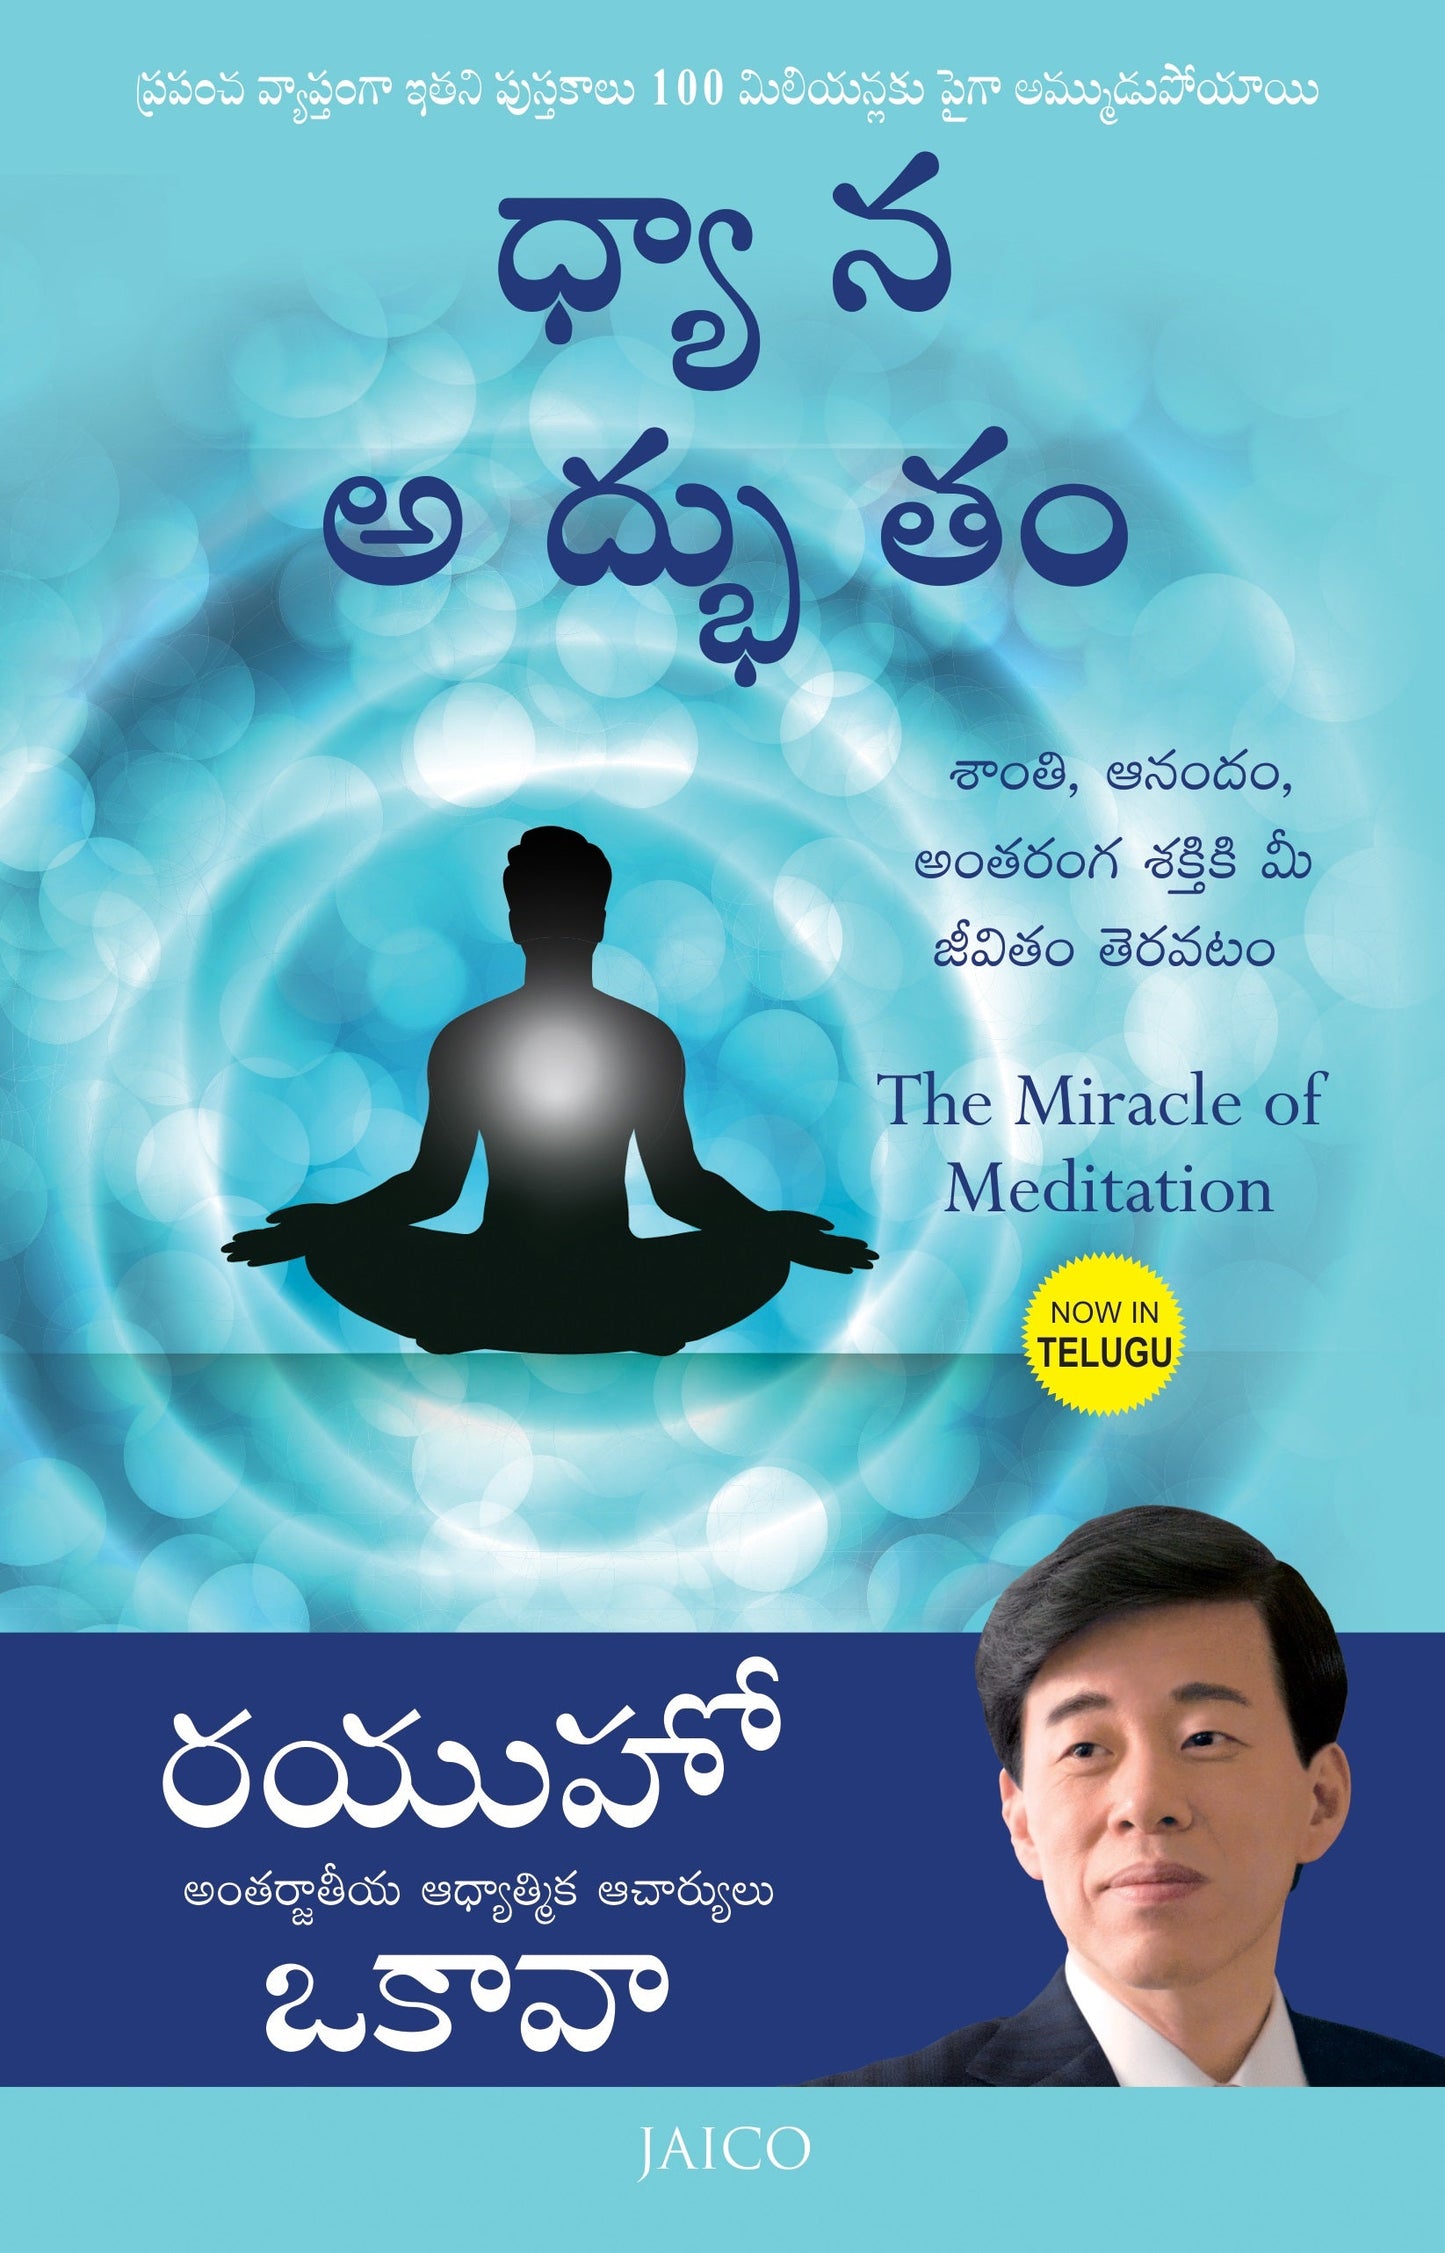 The Miracle of Meditation : Opening Your Life to Peace, Joy and the Power Within, Ryuho Okawa, Telugu - IRH Press International